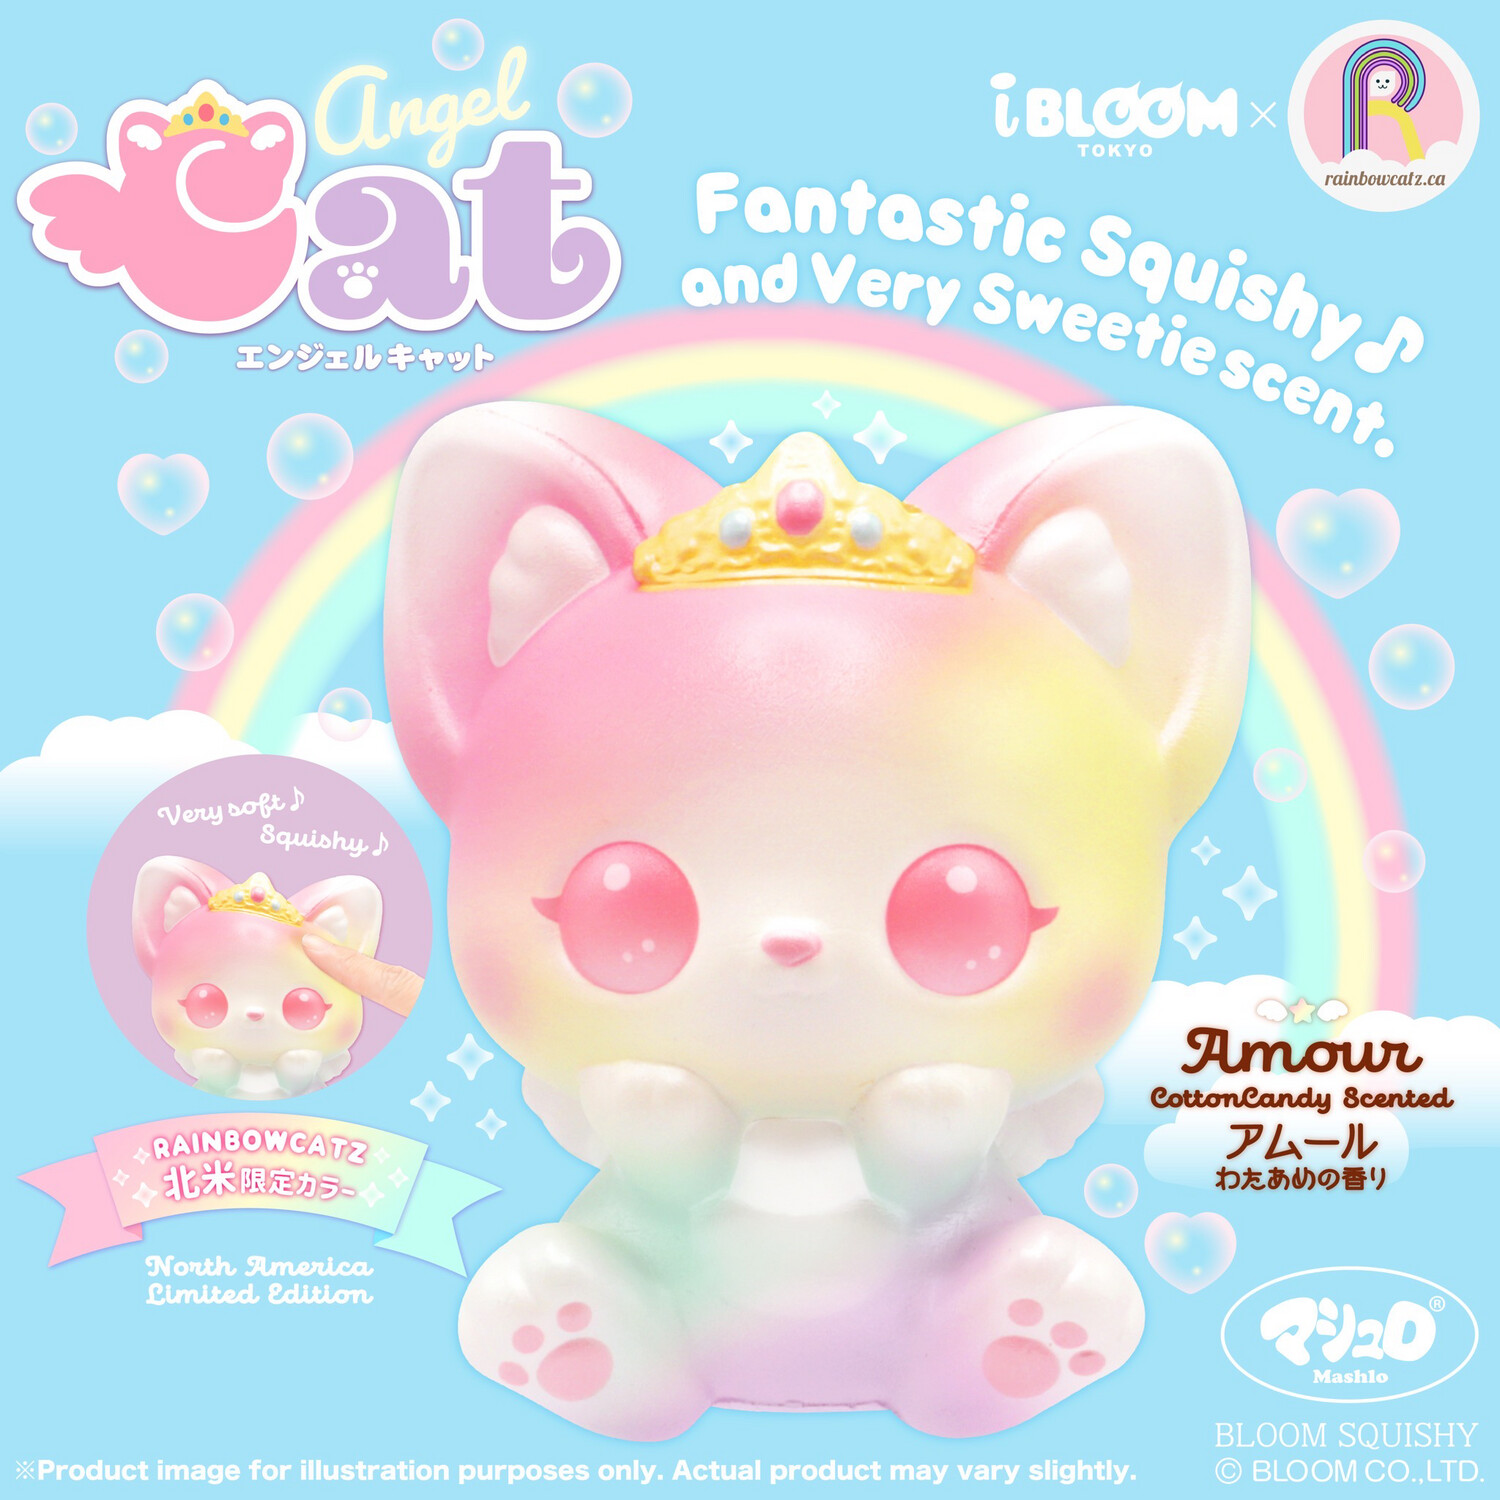 Rainbowcatz X iBloom Rainbow Angel Cat Squishy Toy - Amour (North America Limited Edition)